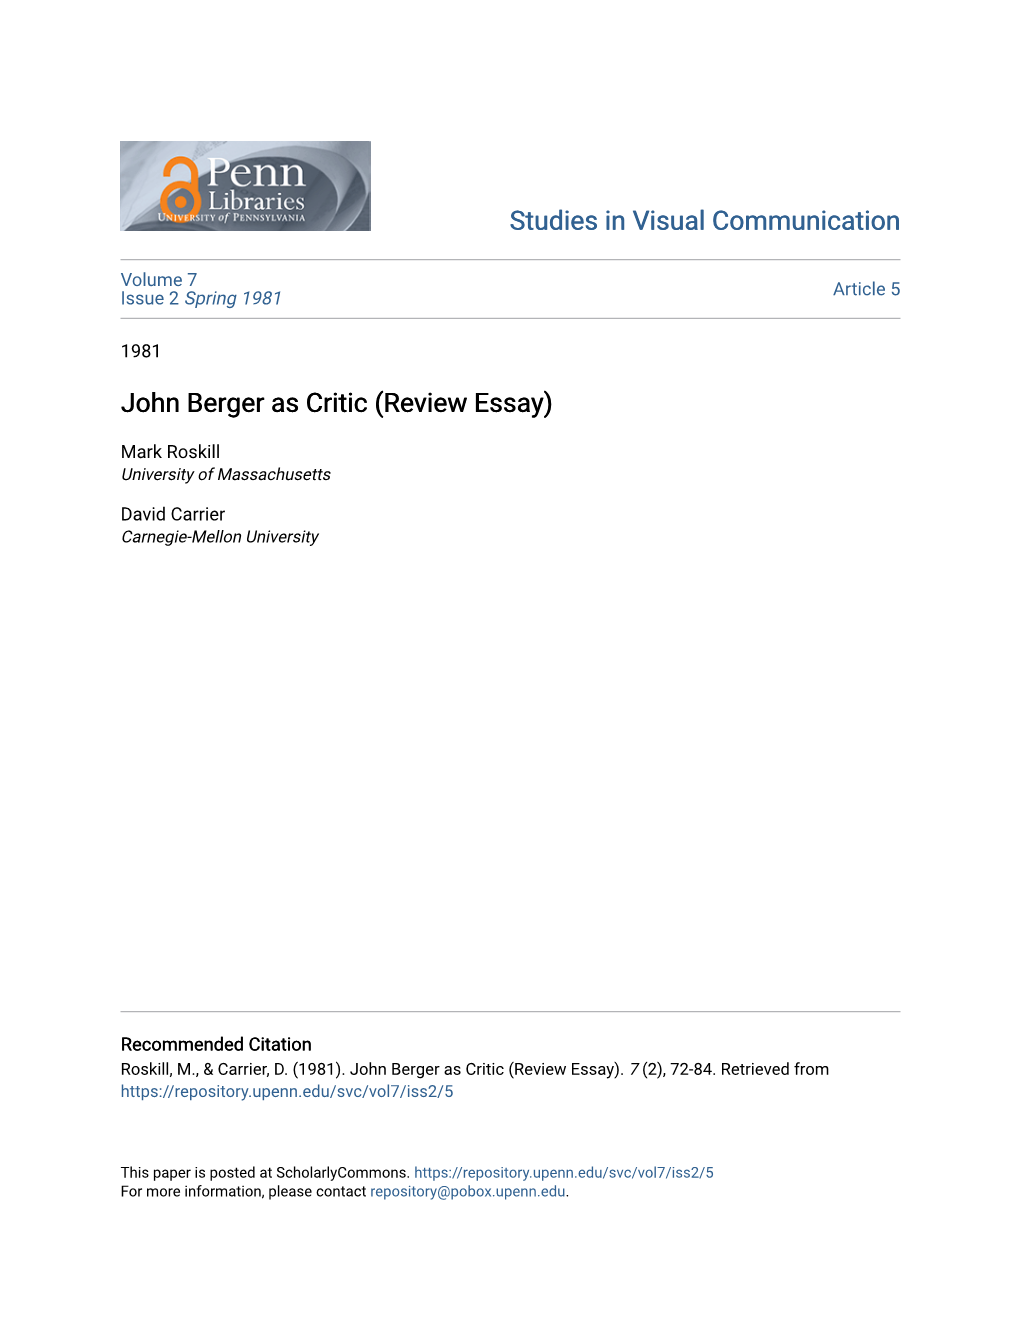 John Berger As Critic (Review Essay)